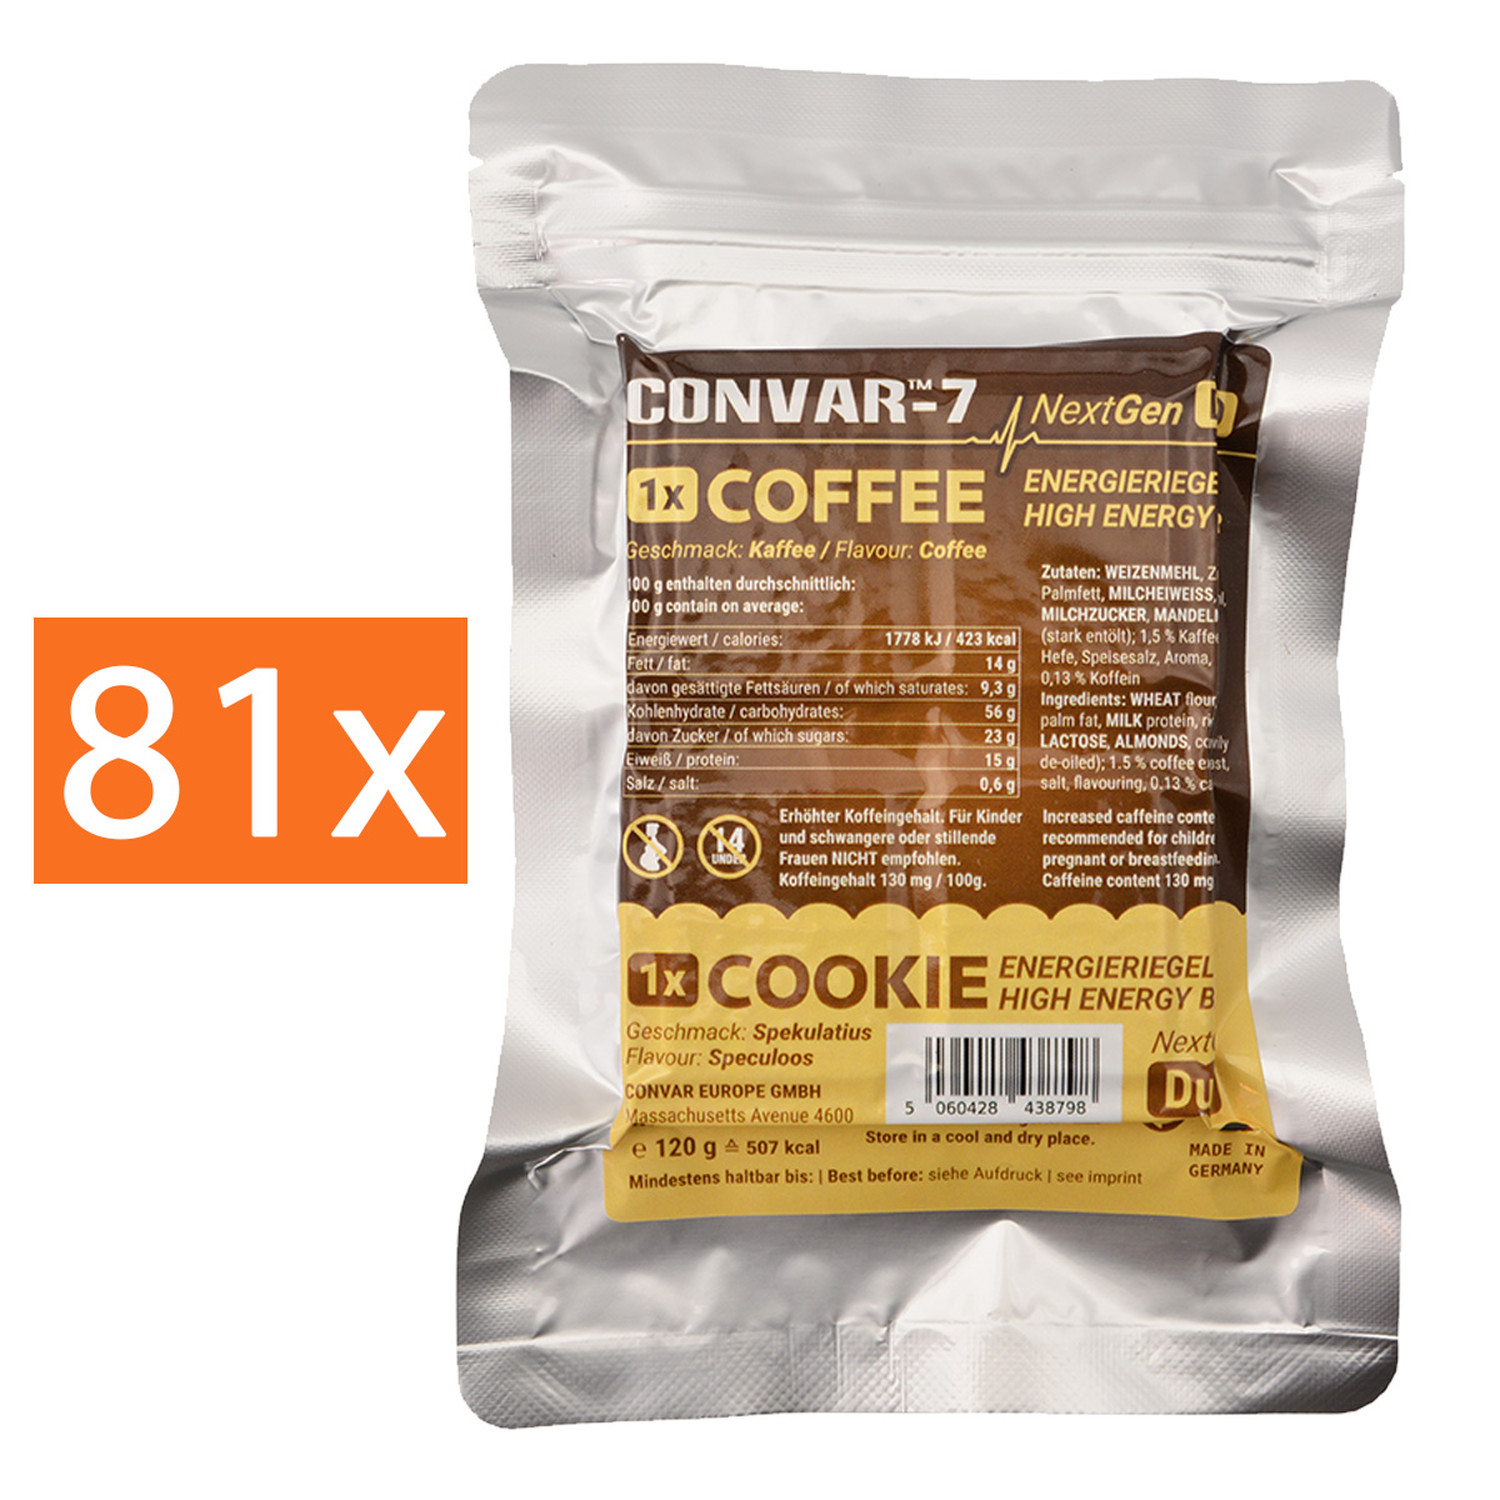 Convar-7 NextGen Energieriegel Coffee & Cookie 81er Karton (81x 120 g)